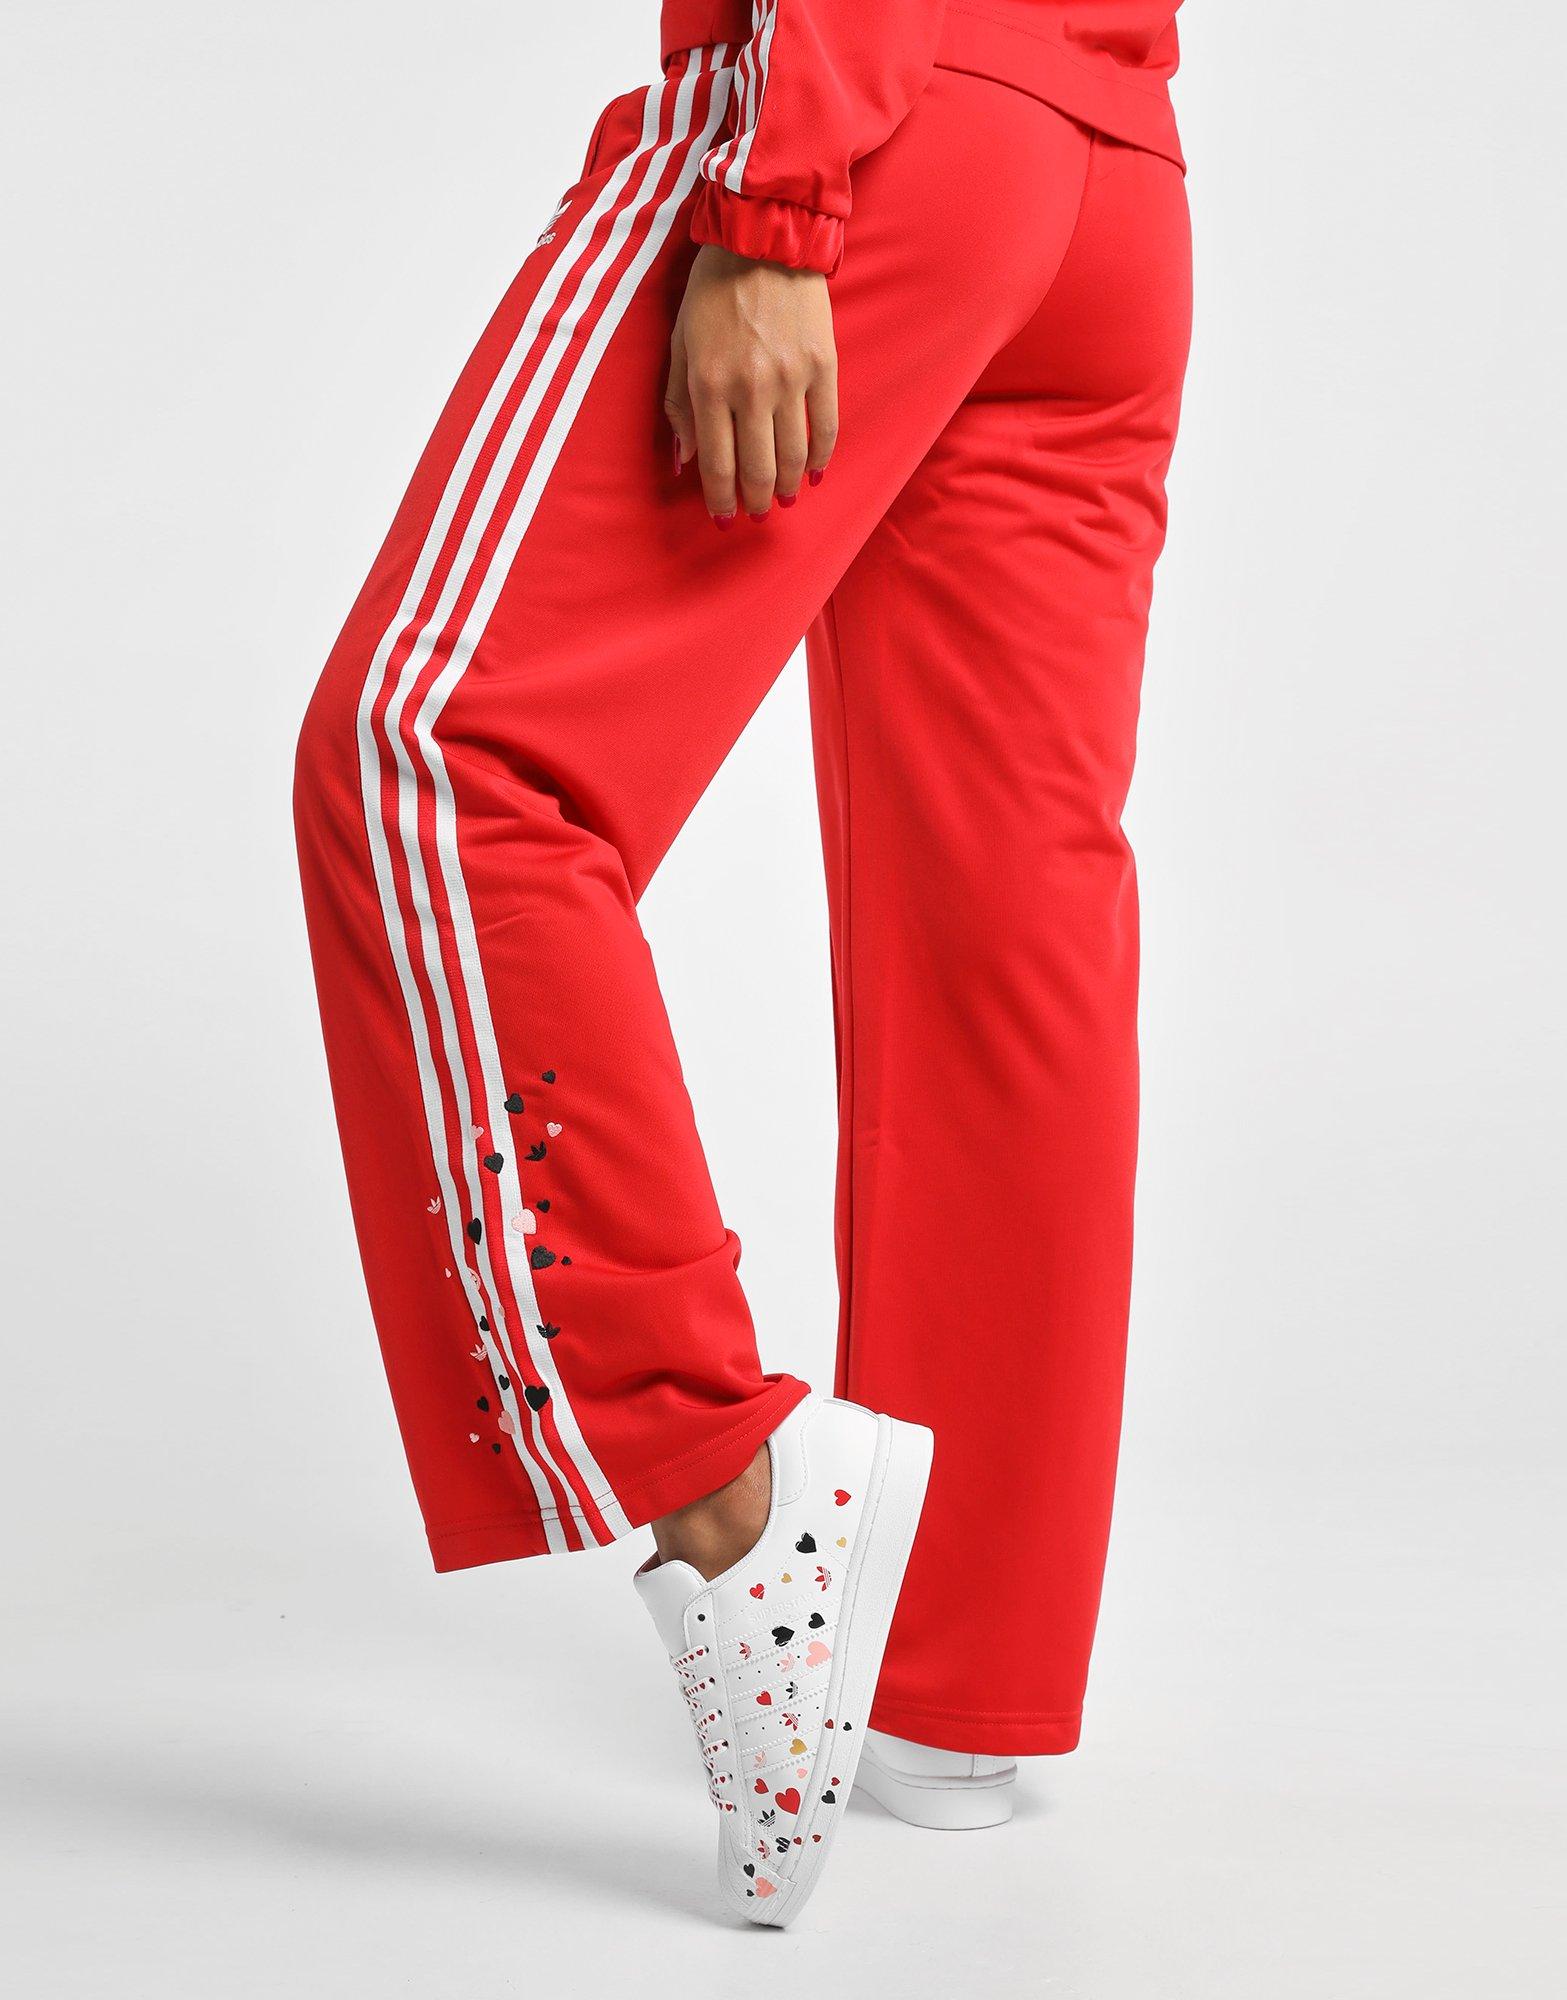 red adidas originals pants